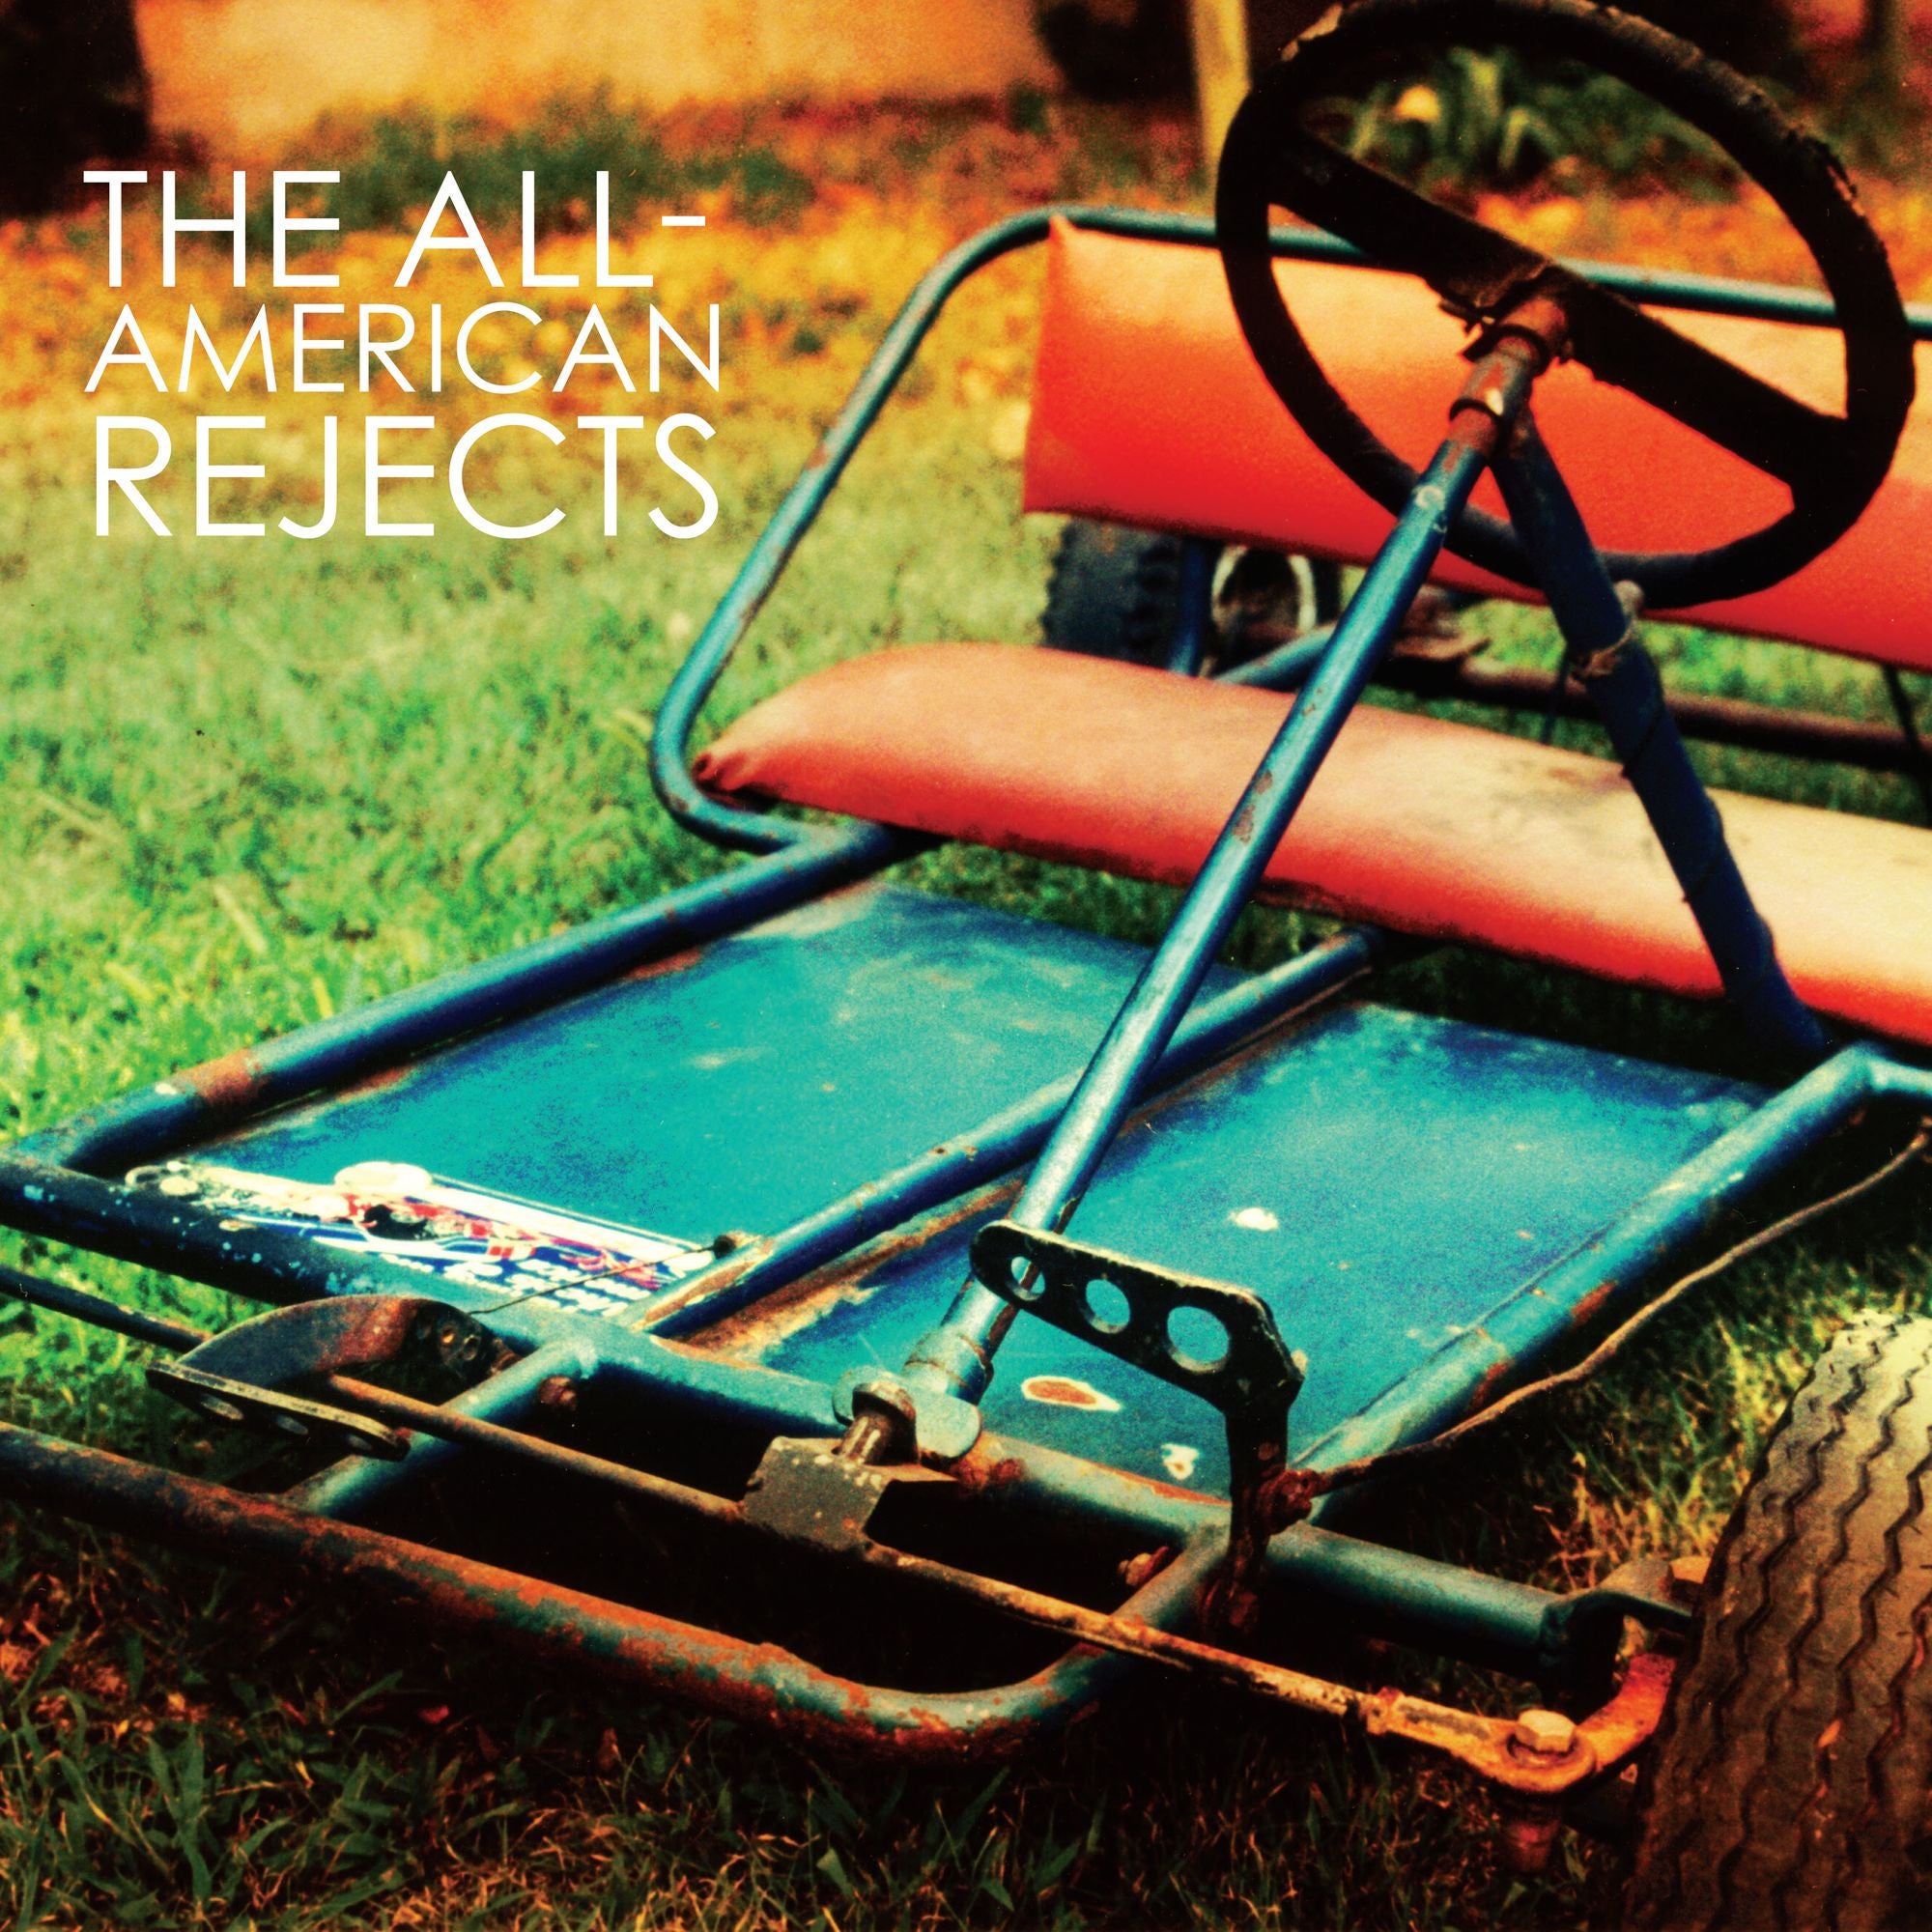 The All-American Rejects ‎– The All American Rejects (2002) - New Lp Record 2018 SRC USA Ten Bands One Cause Pink & White Vinyl - Pop Punk